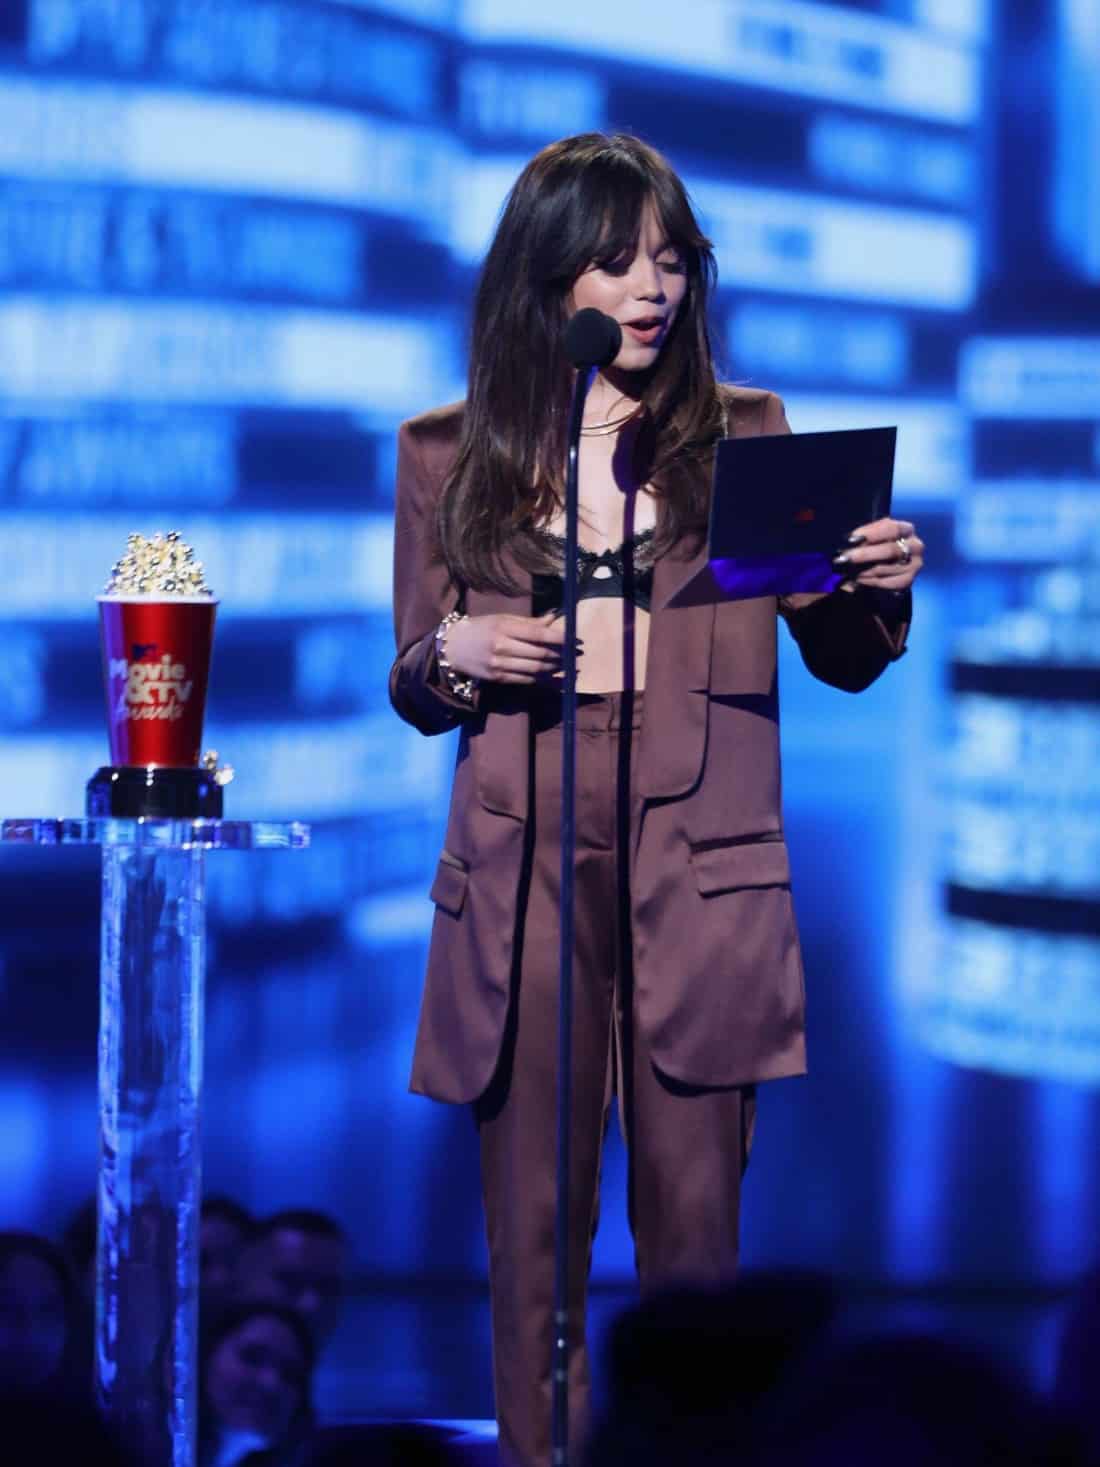 Jenna Ortega Rocks Brown Pantsuit and Black Lace Bra at MTV Awards